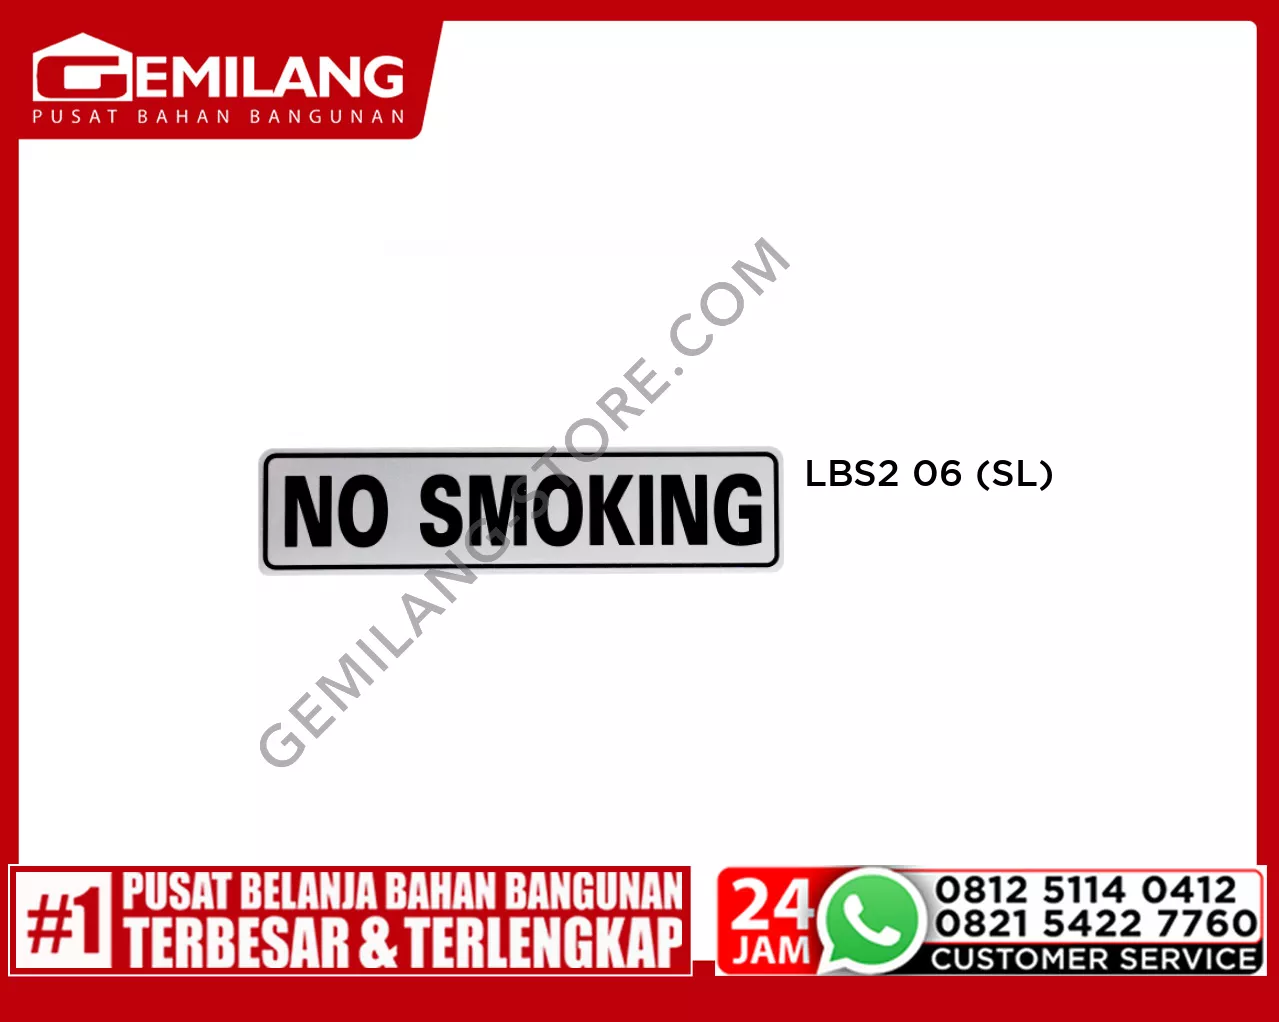 LBS2 06 NO SMOKING (SL)